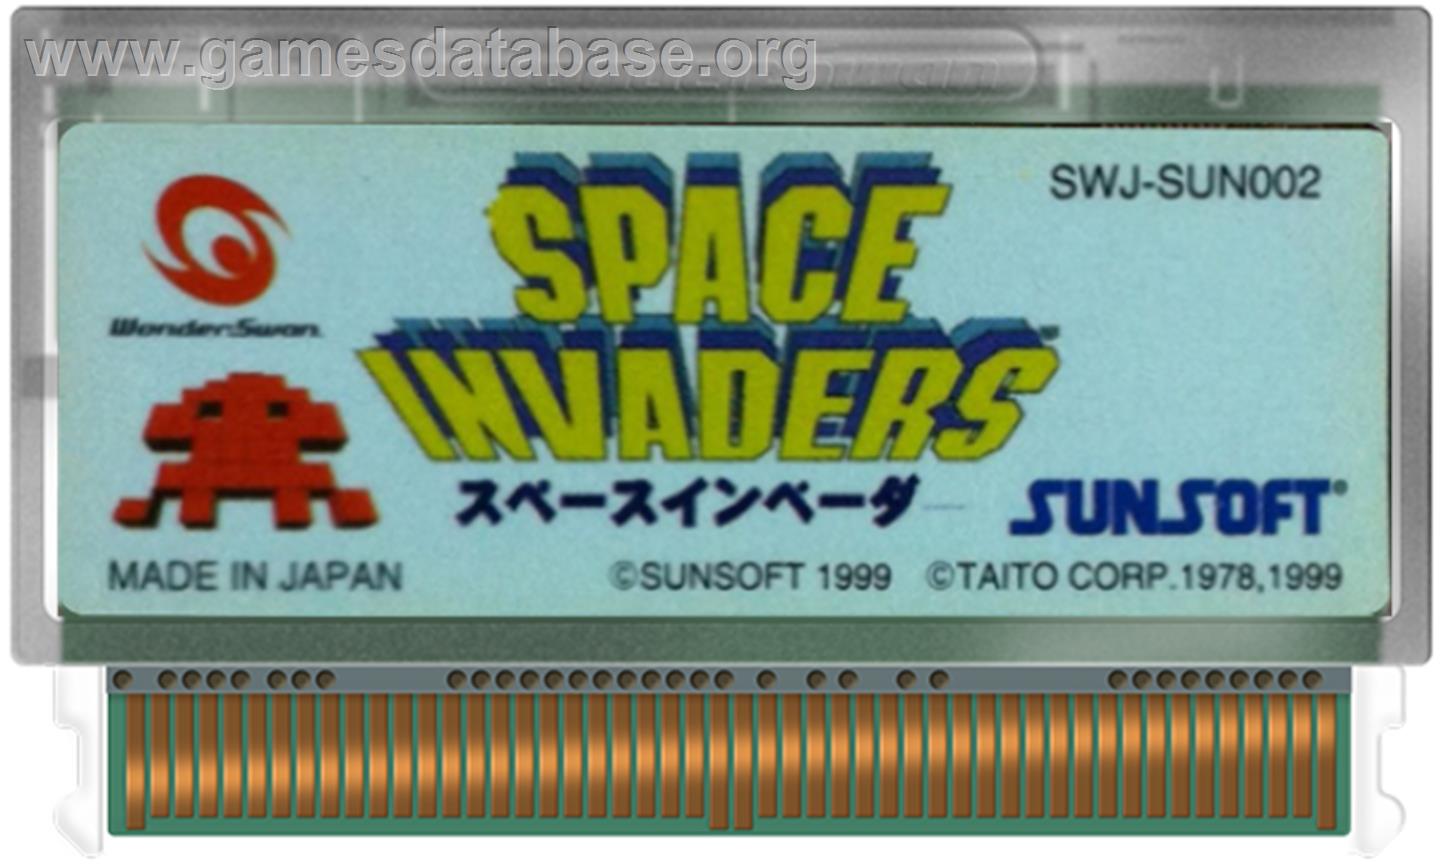 Space Invaders - Bandai WonderSwan - Artwork - Cartridge